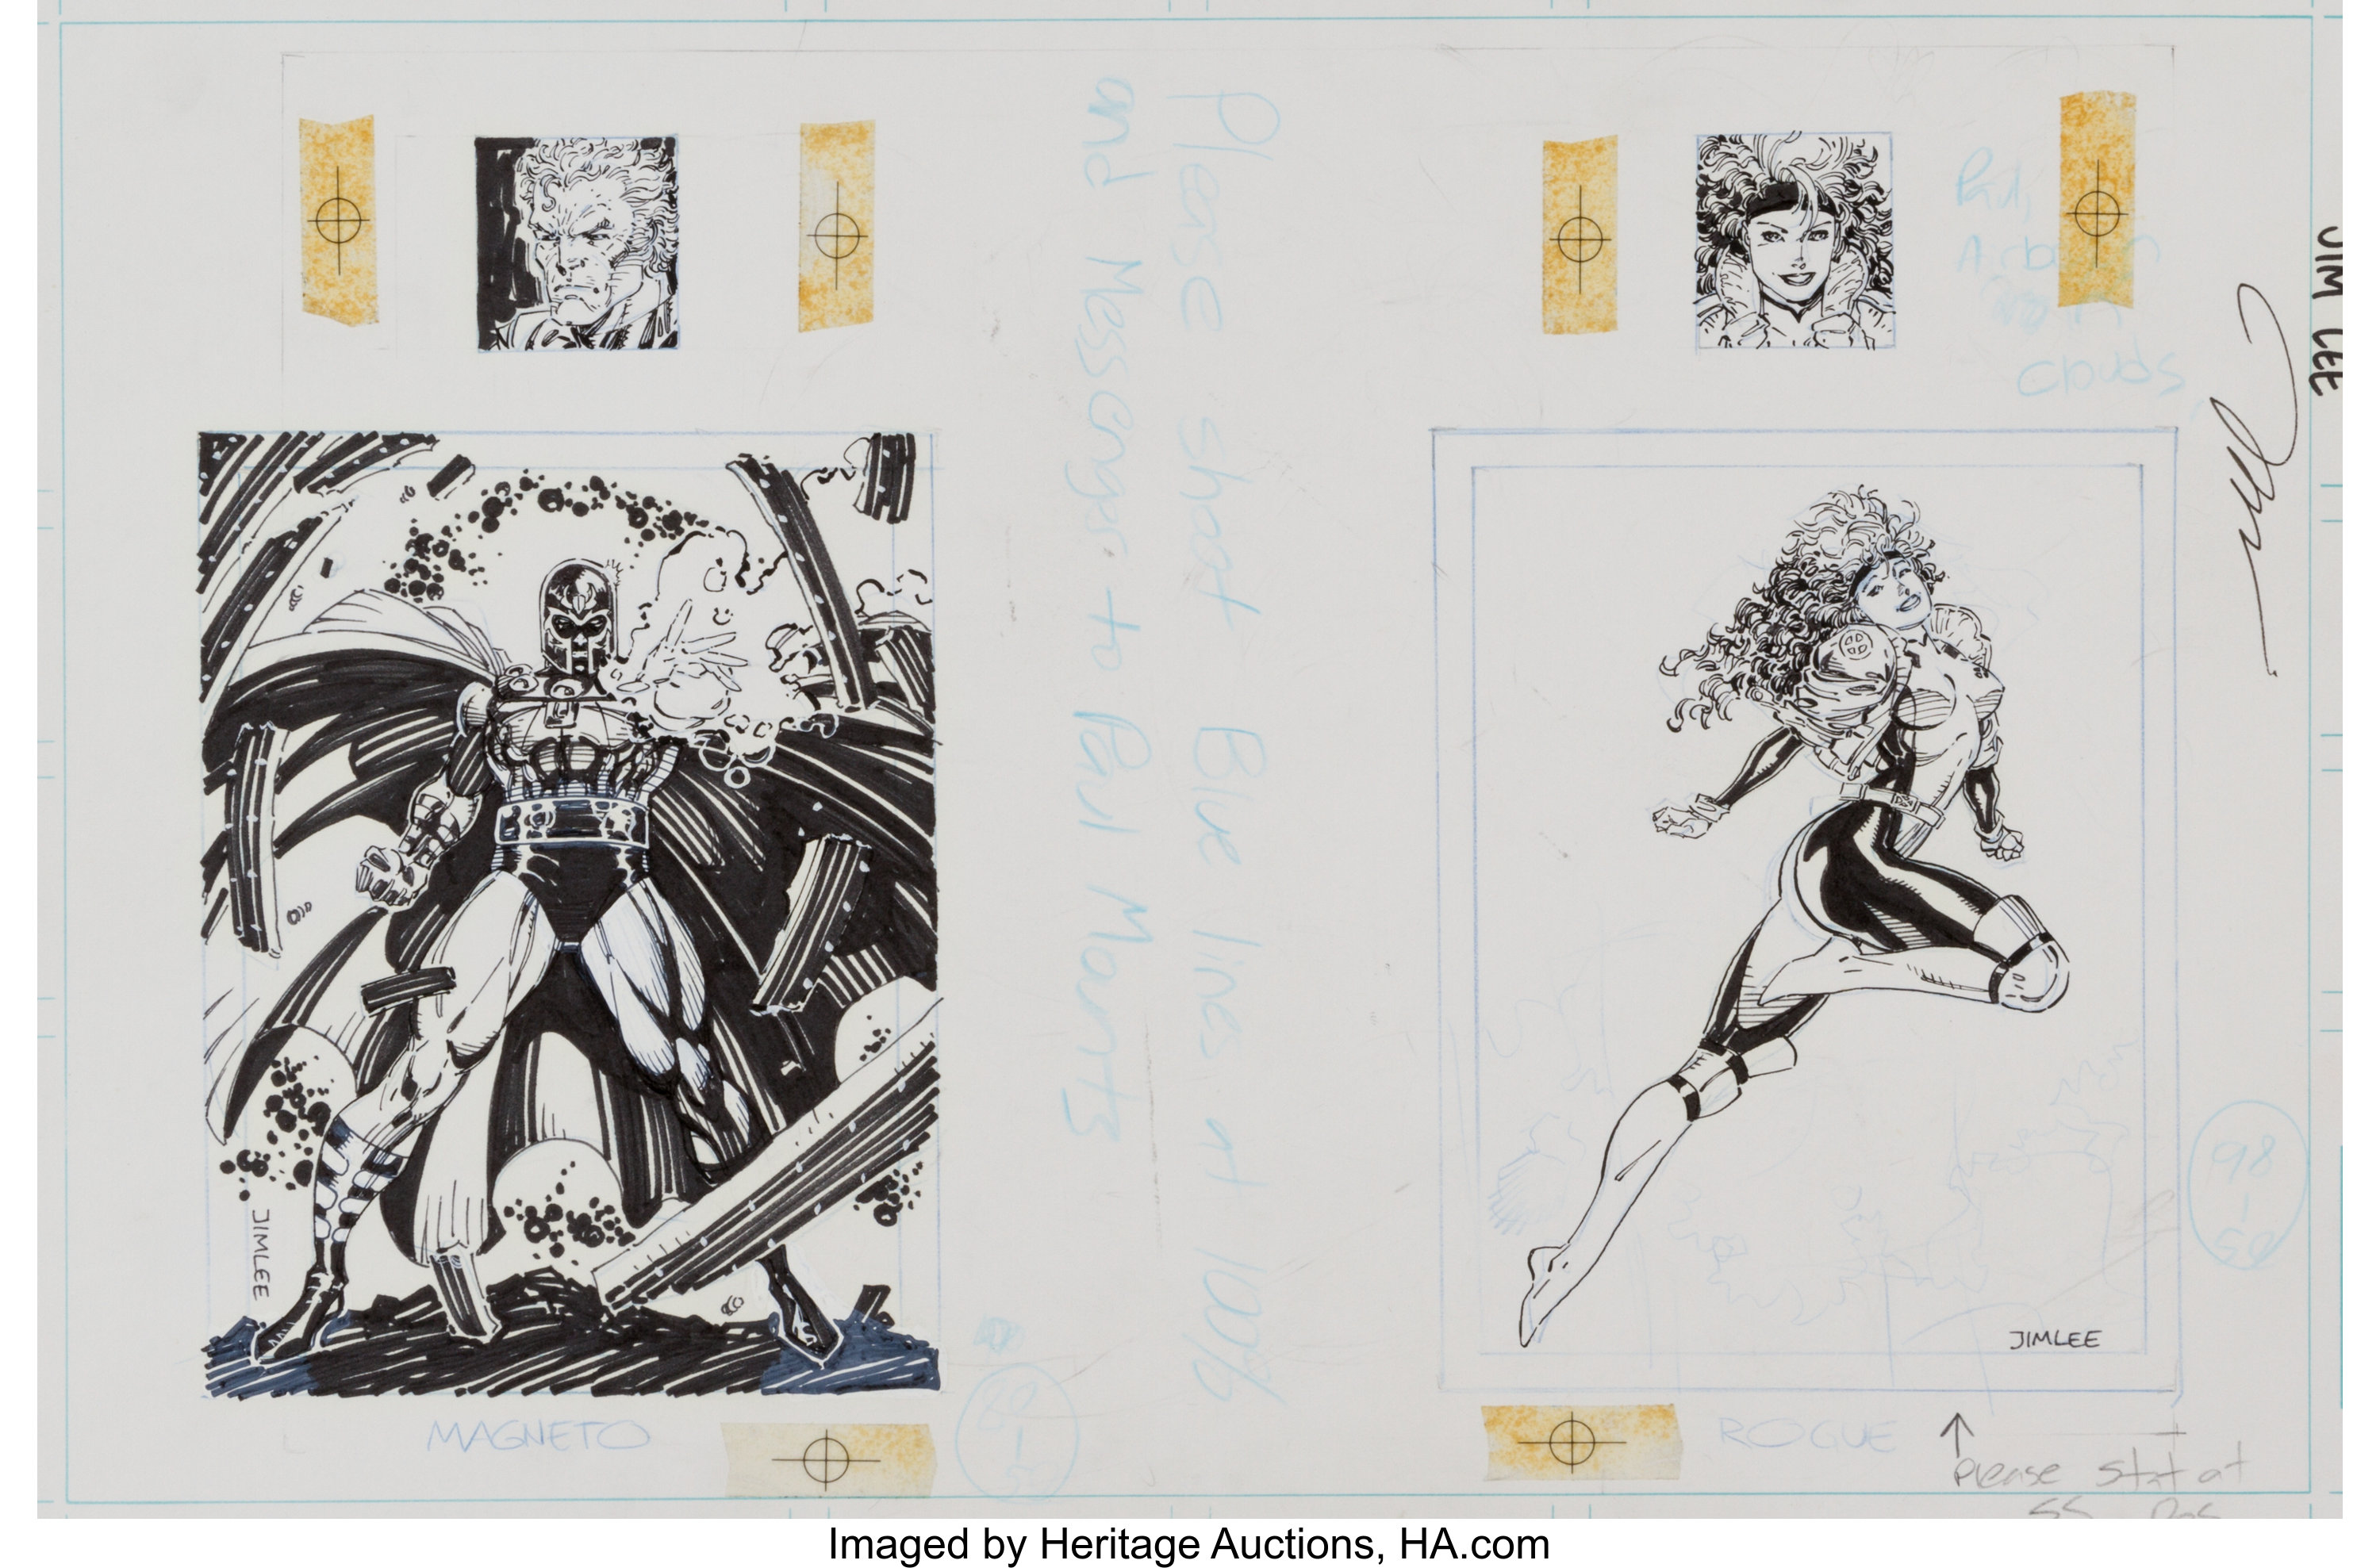 Jim Lee X-Men Trading Cards Series I - Magneto/Rogue Original Art | Lot  #92256 | Heritage Auctions